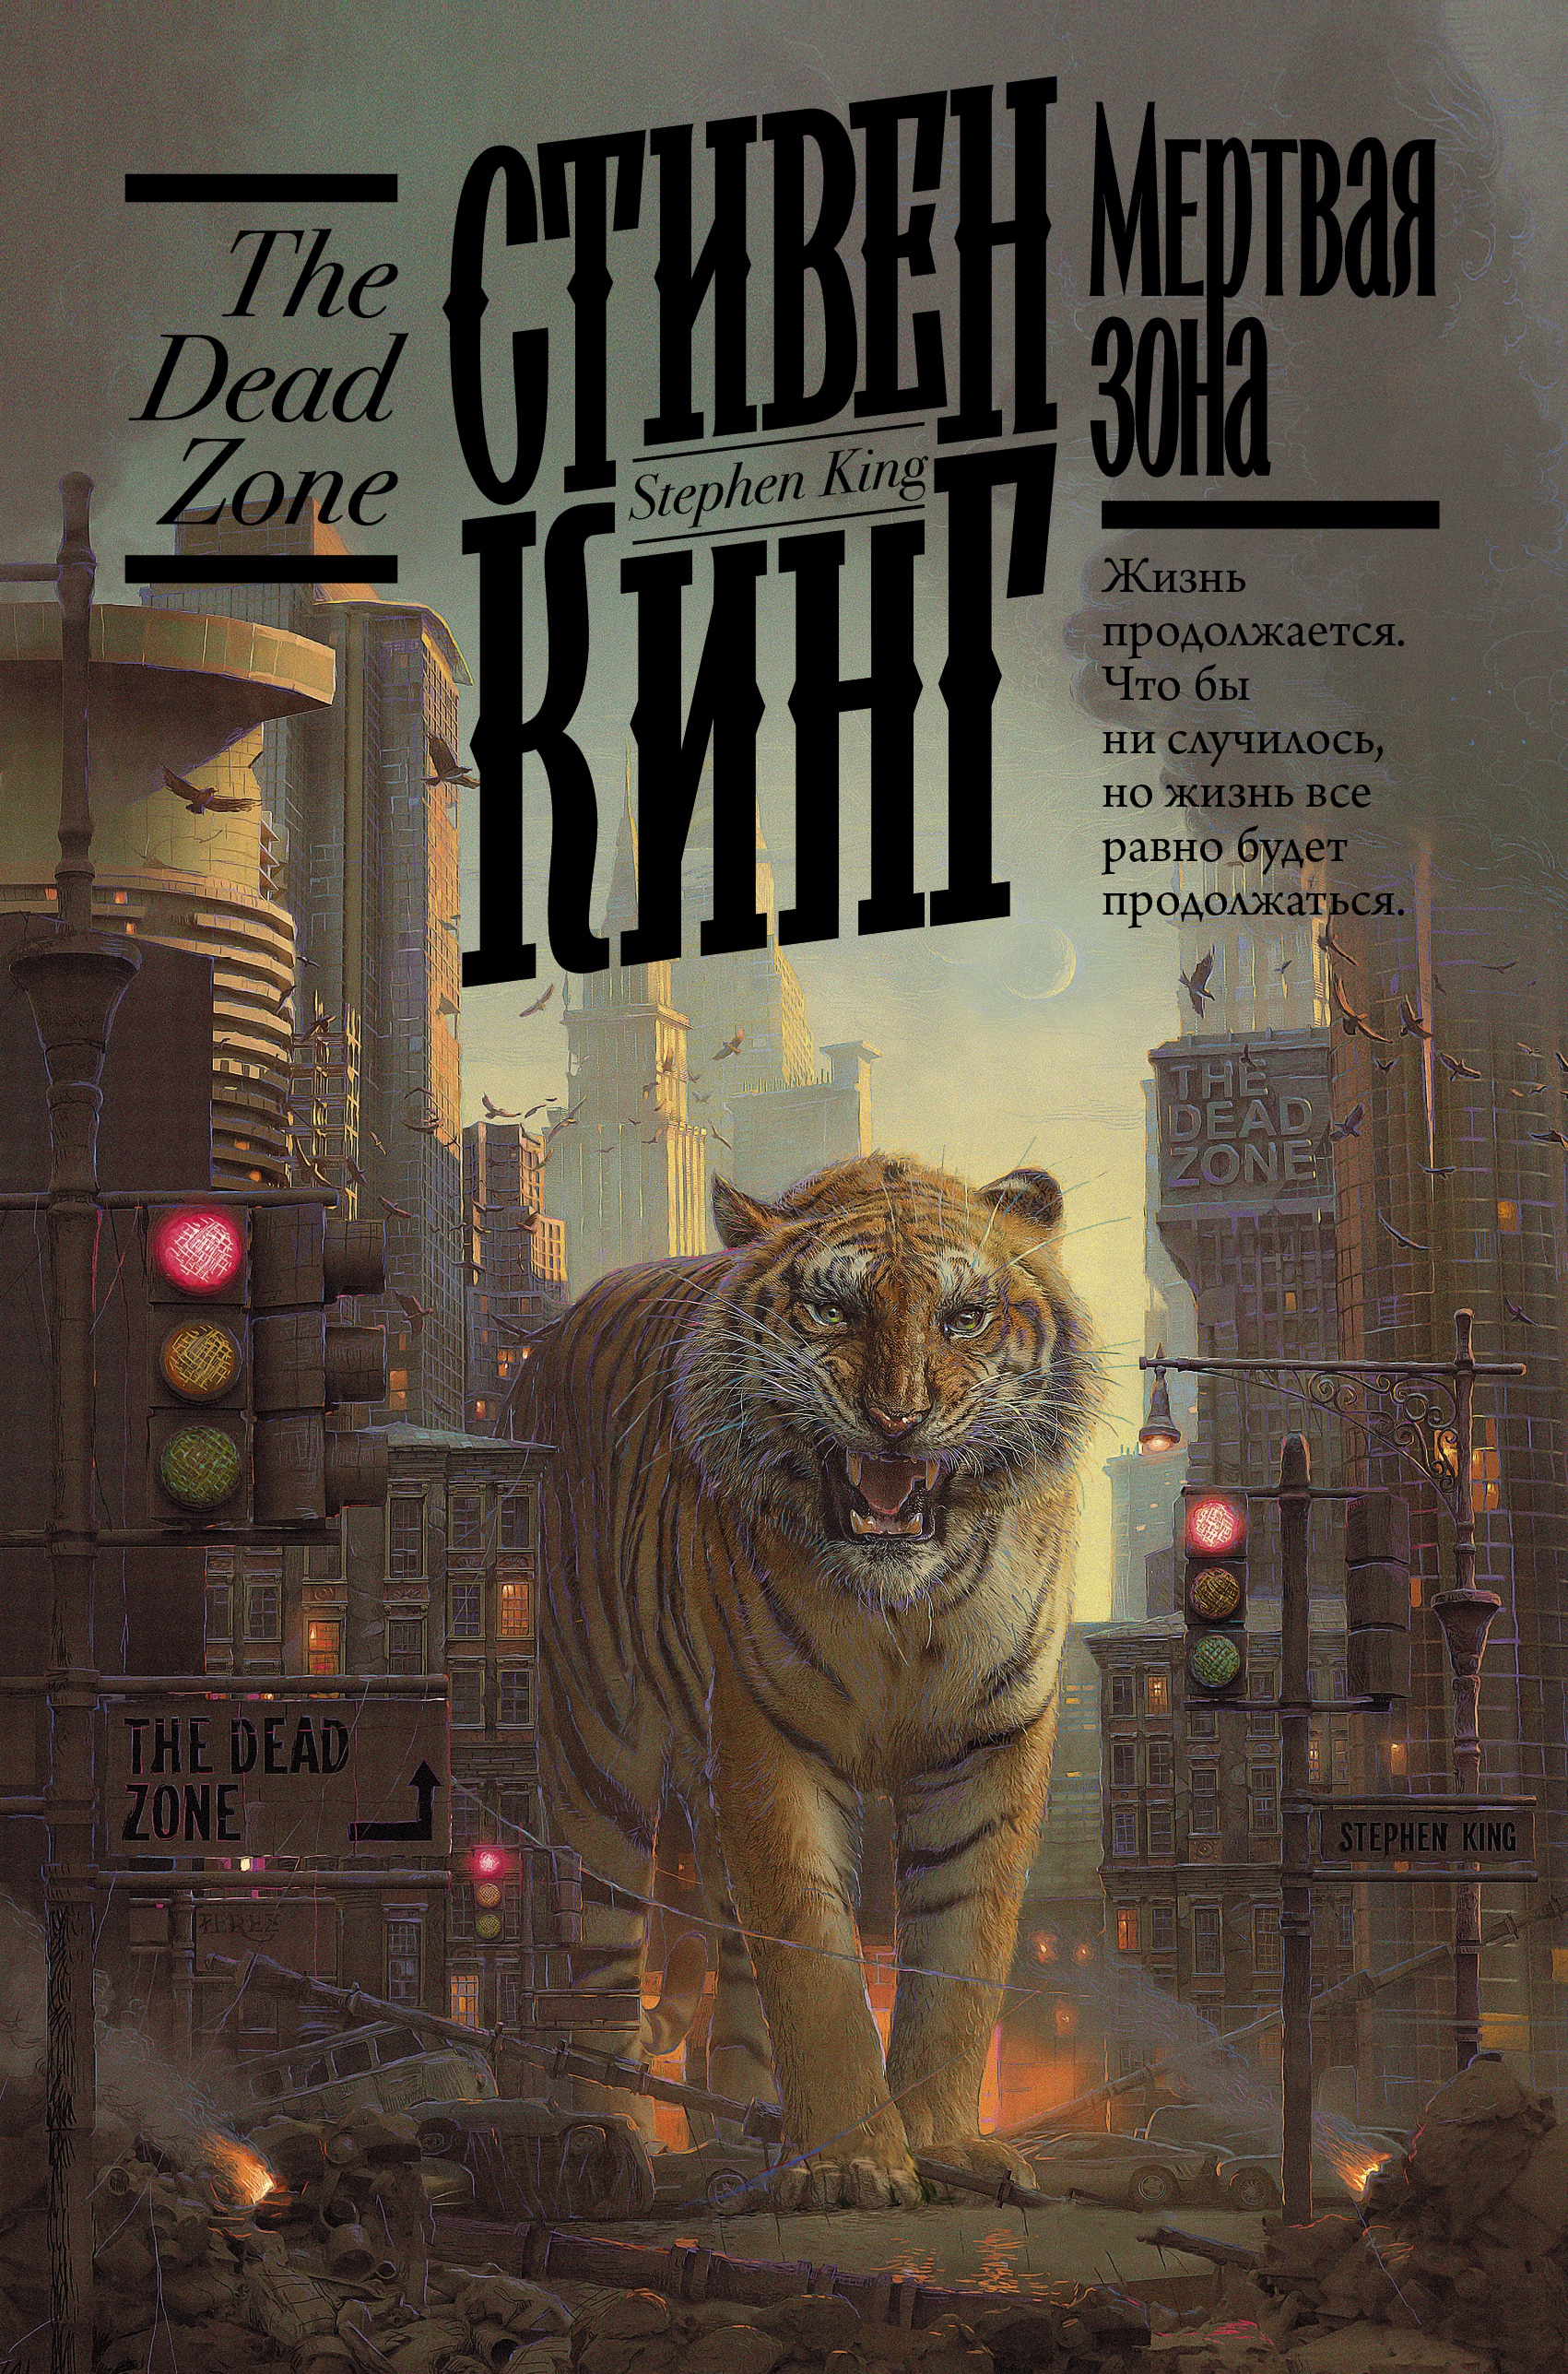 Book “Мертвая зона” by Стивен Кинг — 2021